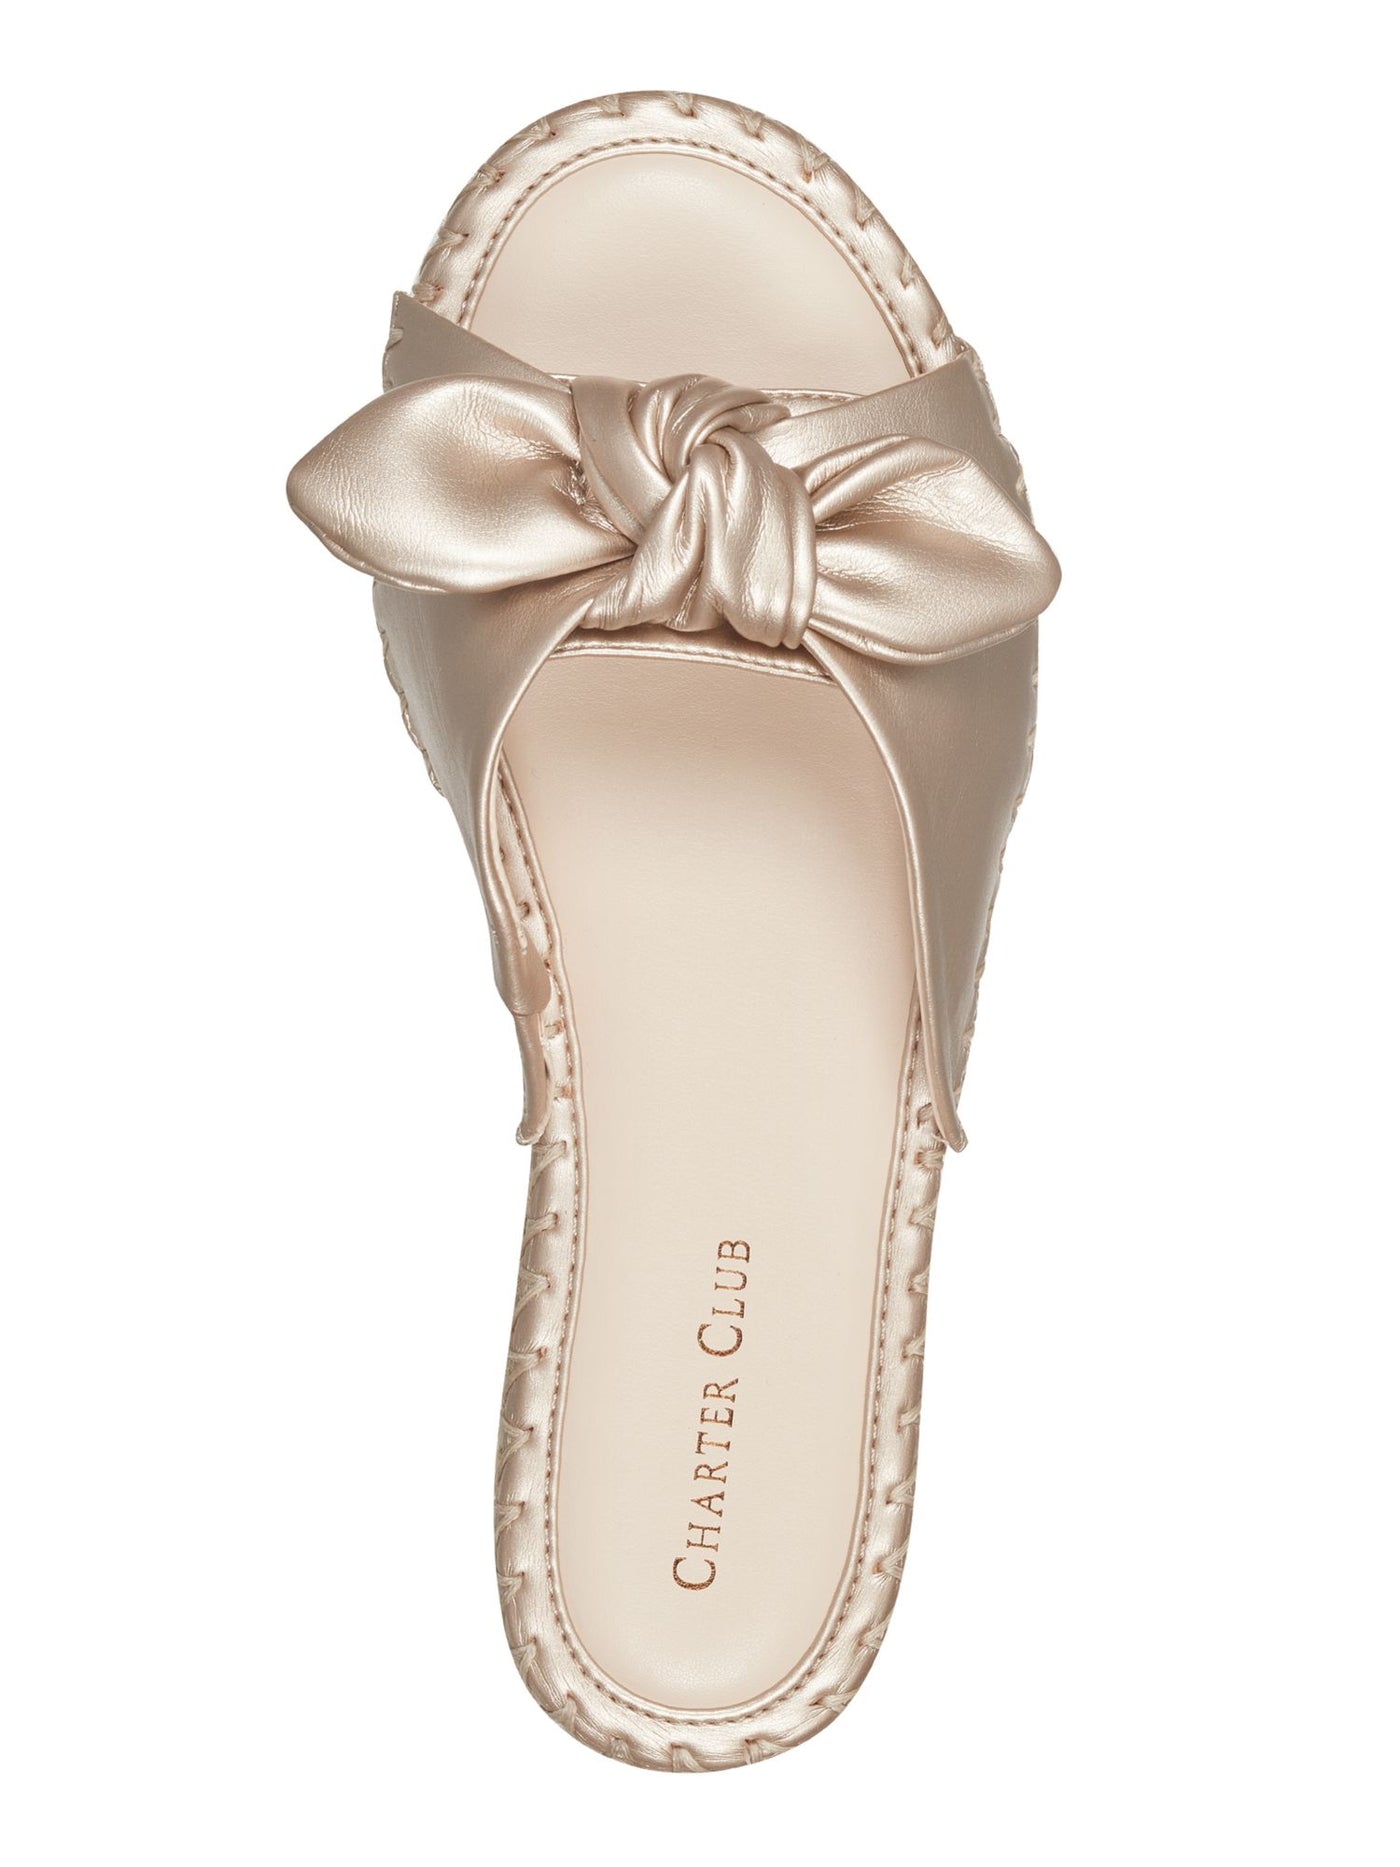 CHARTER CLUB Womens Gold Knot Padded Goring Ashland Round Toe Slip On Espadrille Shoes 9 M